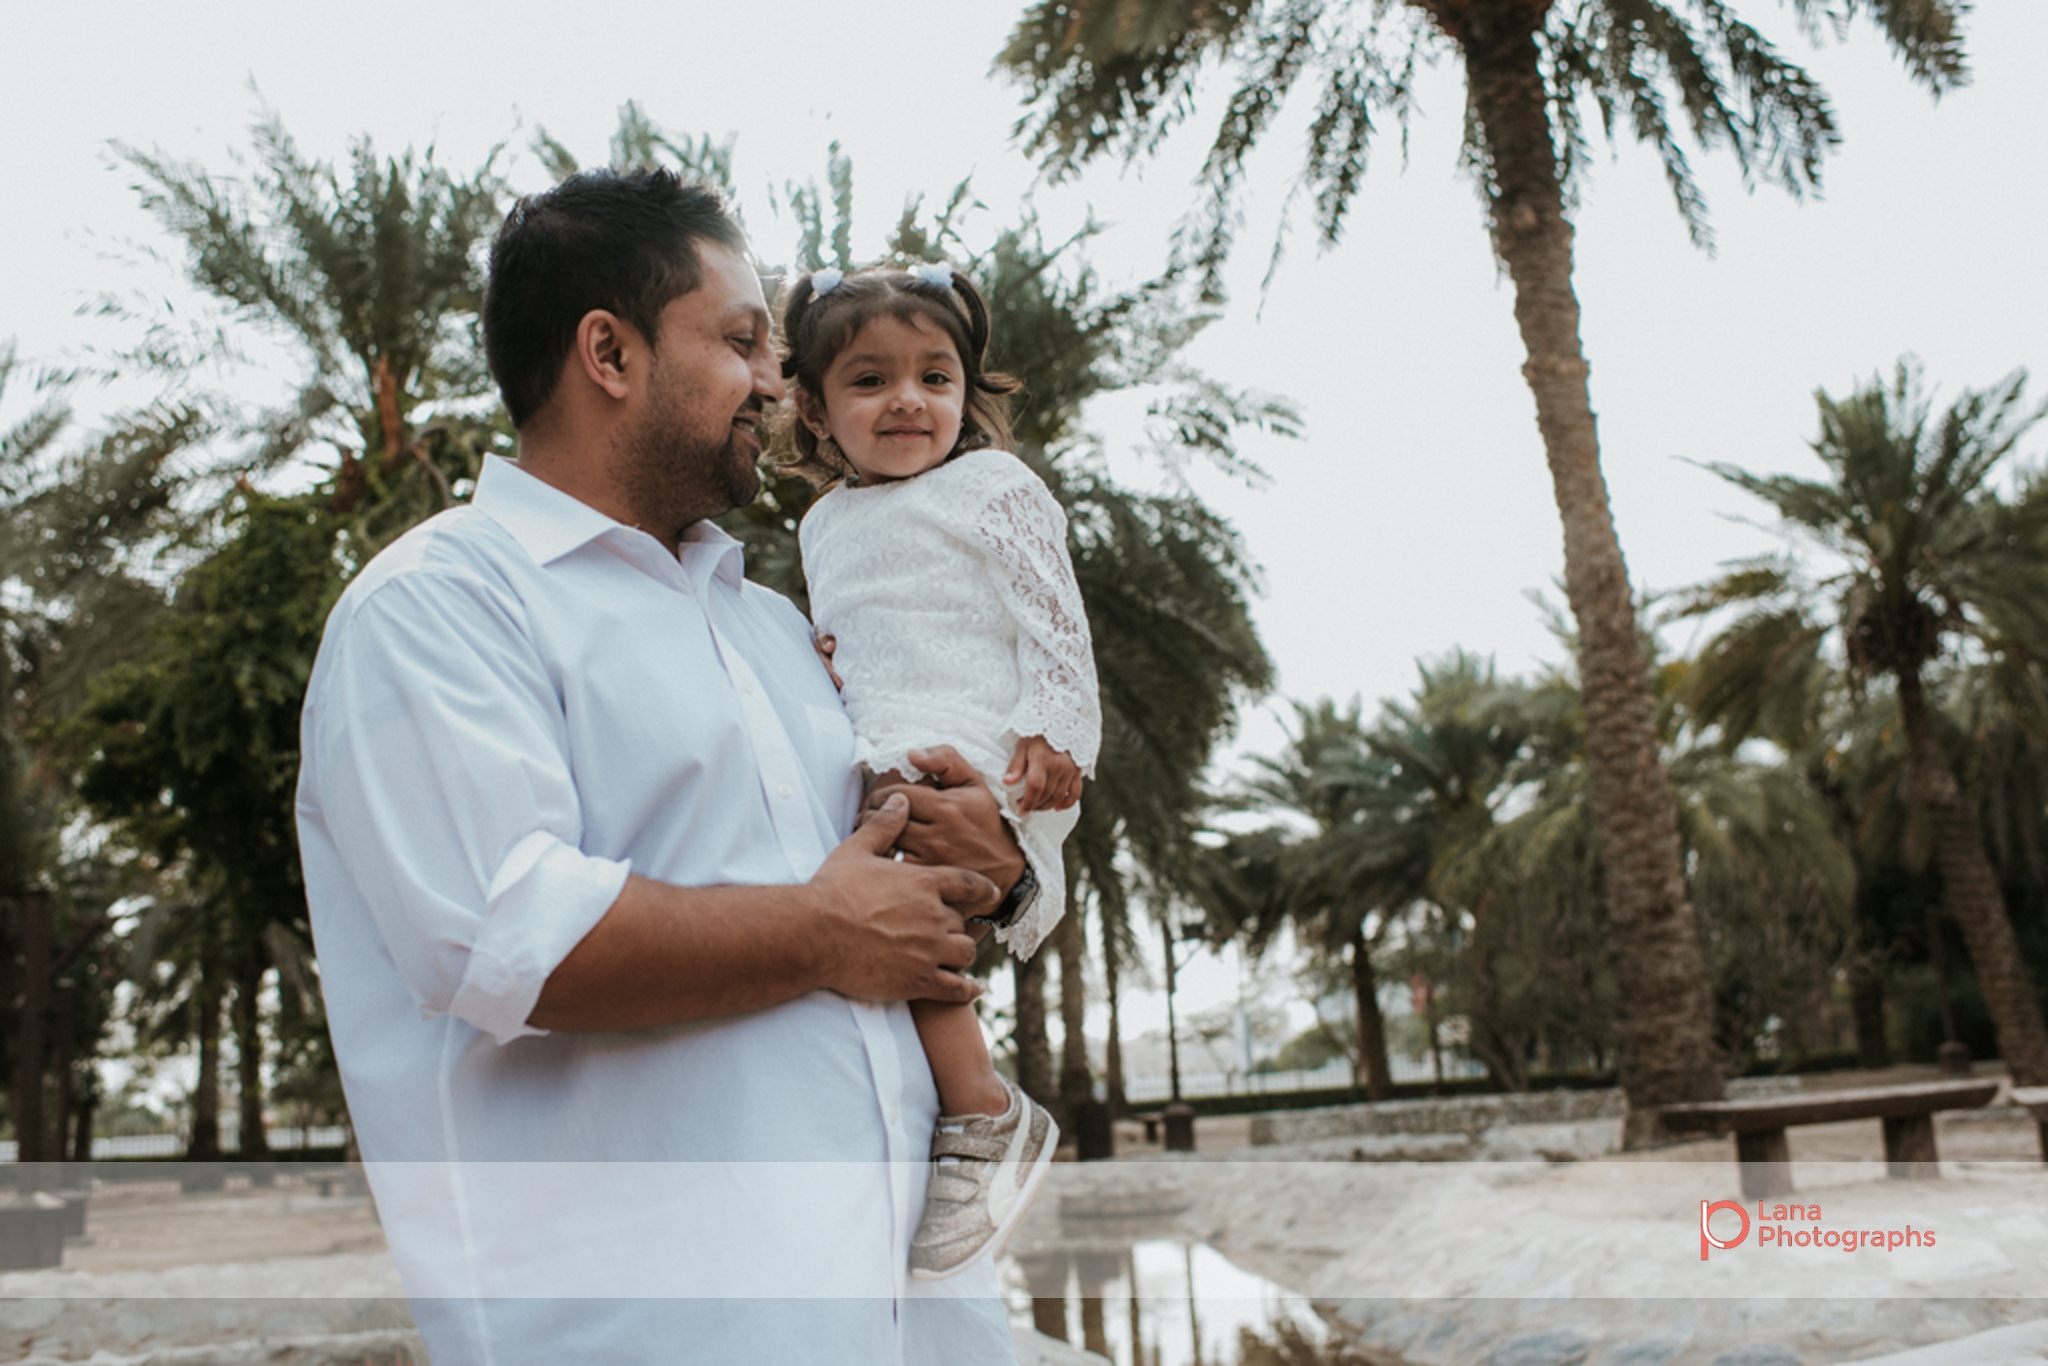 Lana Photographs Family Photographer Dubai Top Family Photographers father carrying girl under palm trees